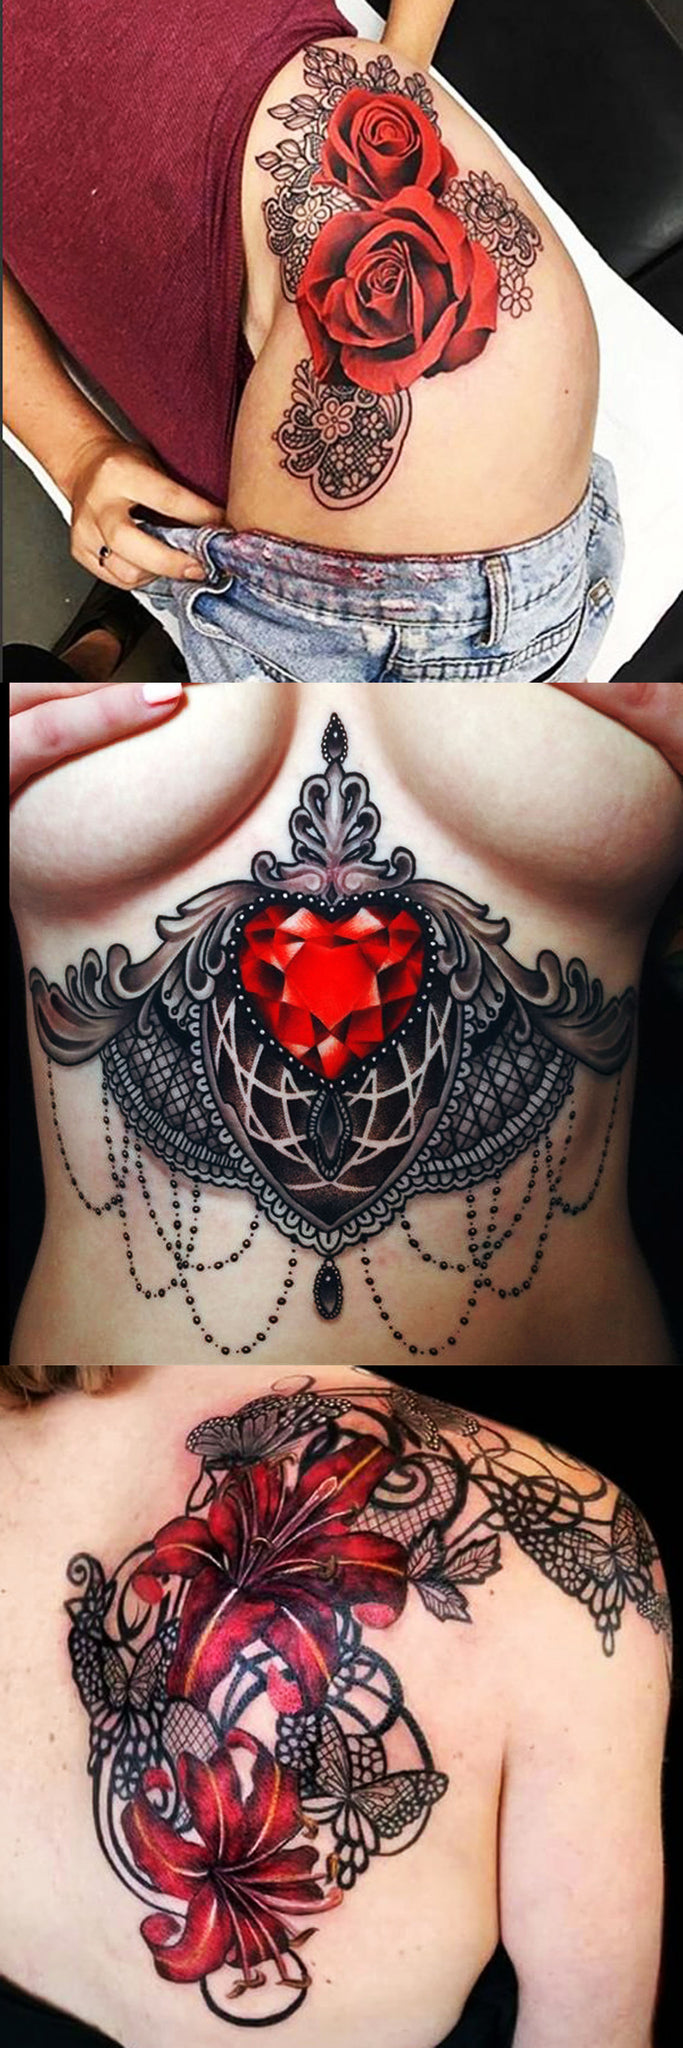 Rose Tattoo Ideas for Shoulder at MyBodiArt.com - Womens Red Heart Sternum Underboob Tatt - Black Henna Thigh Lace Tat